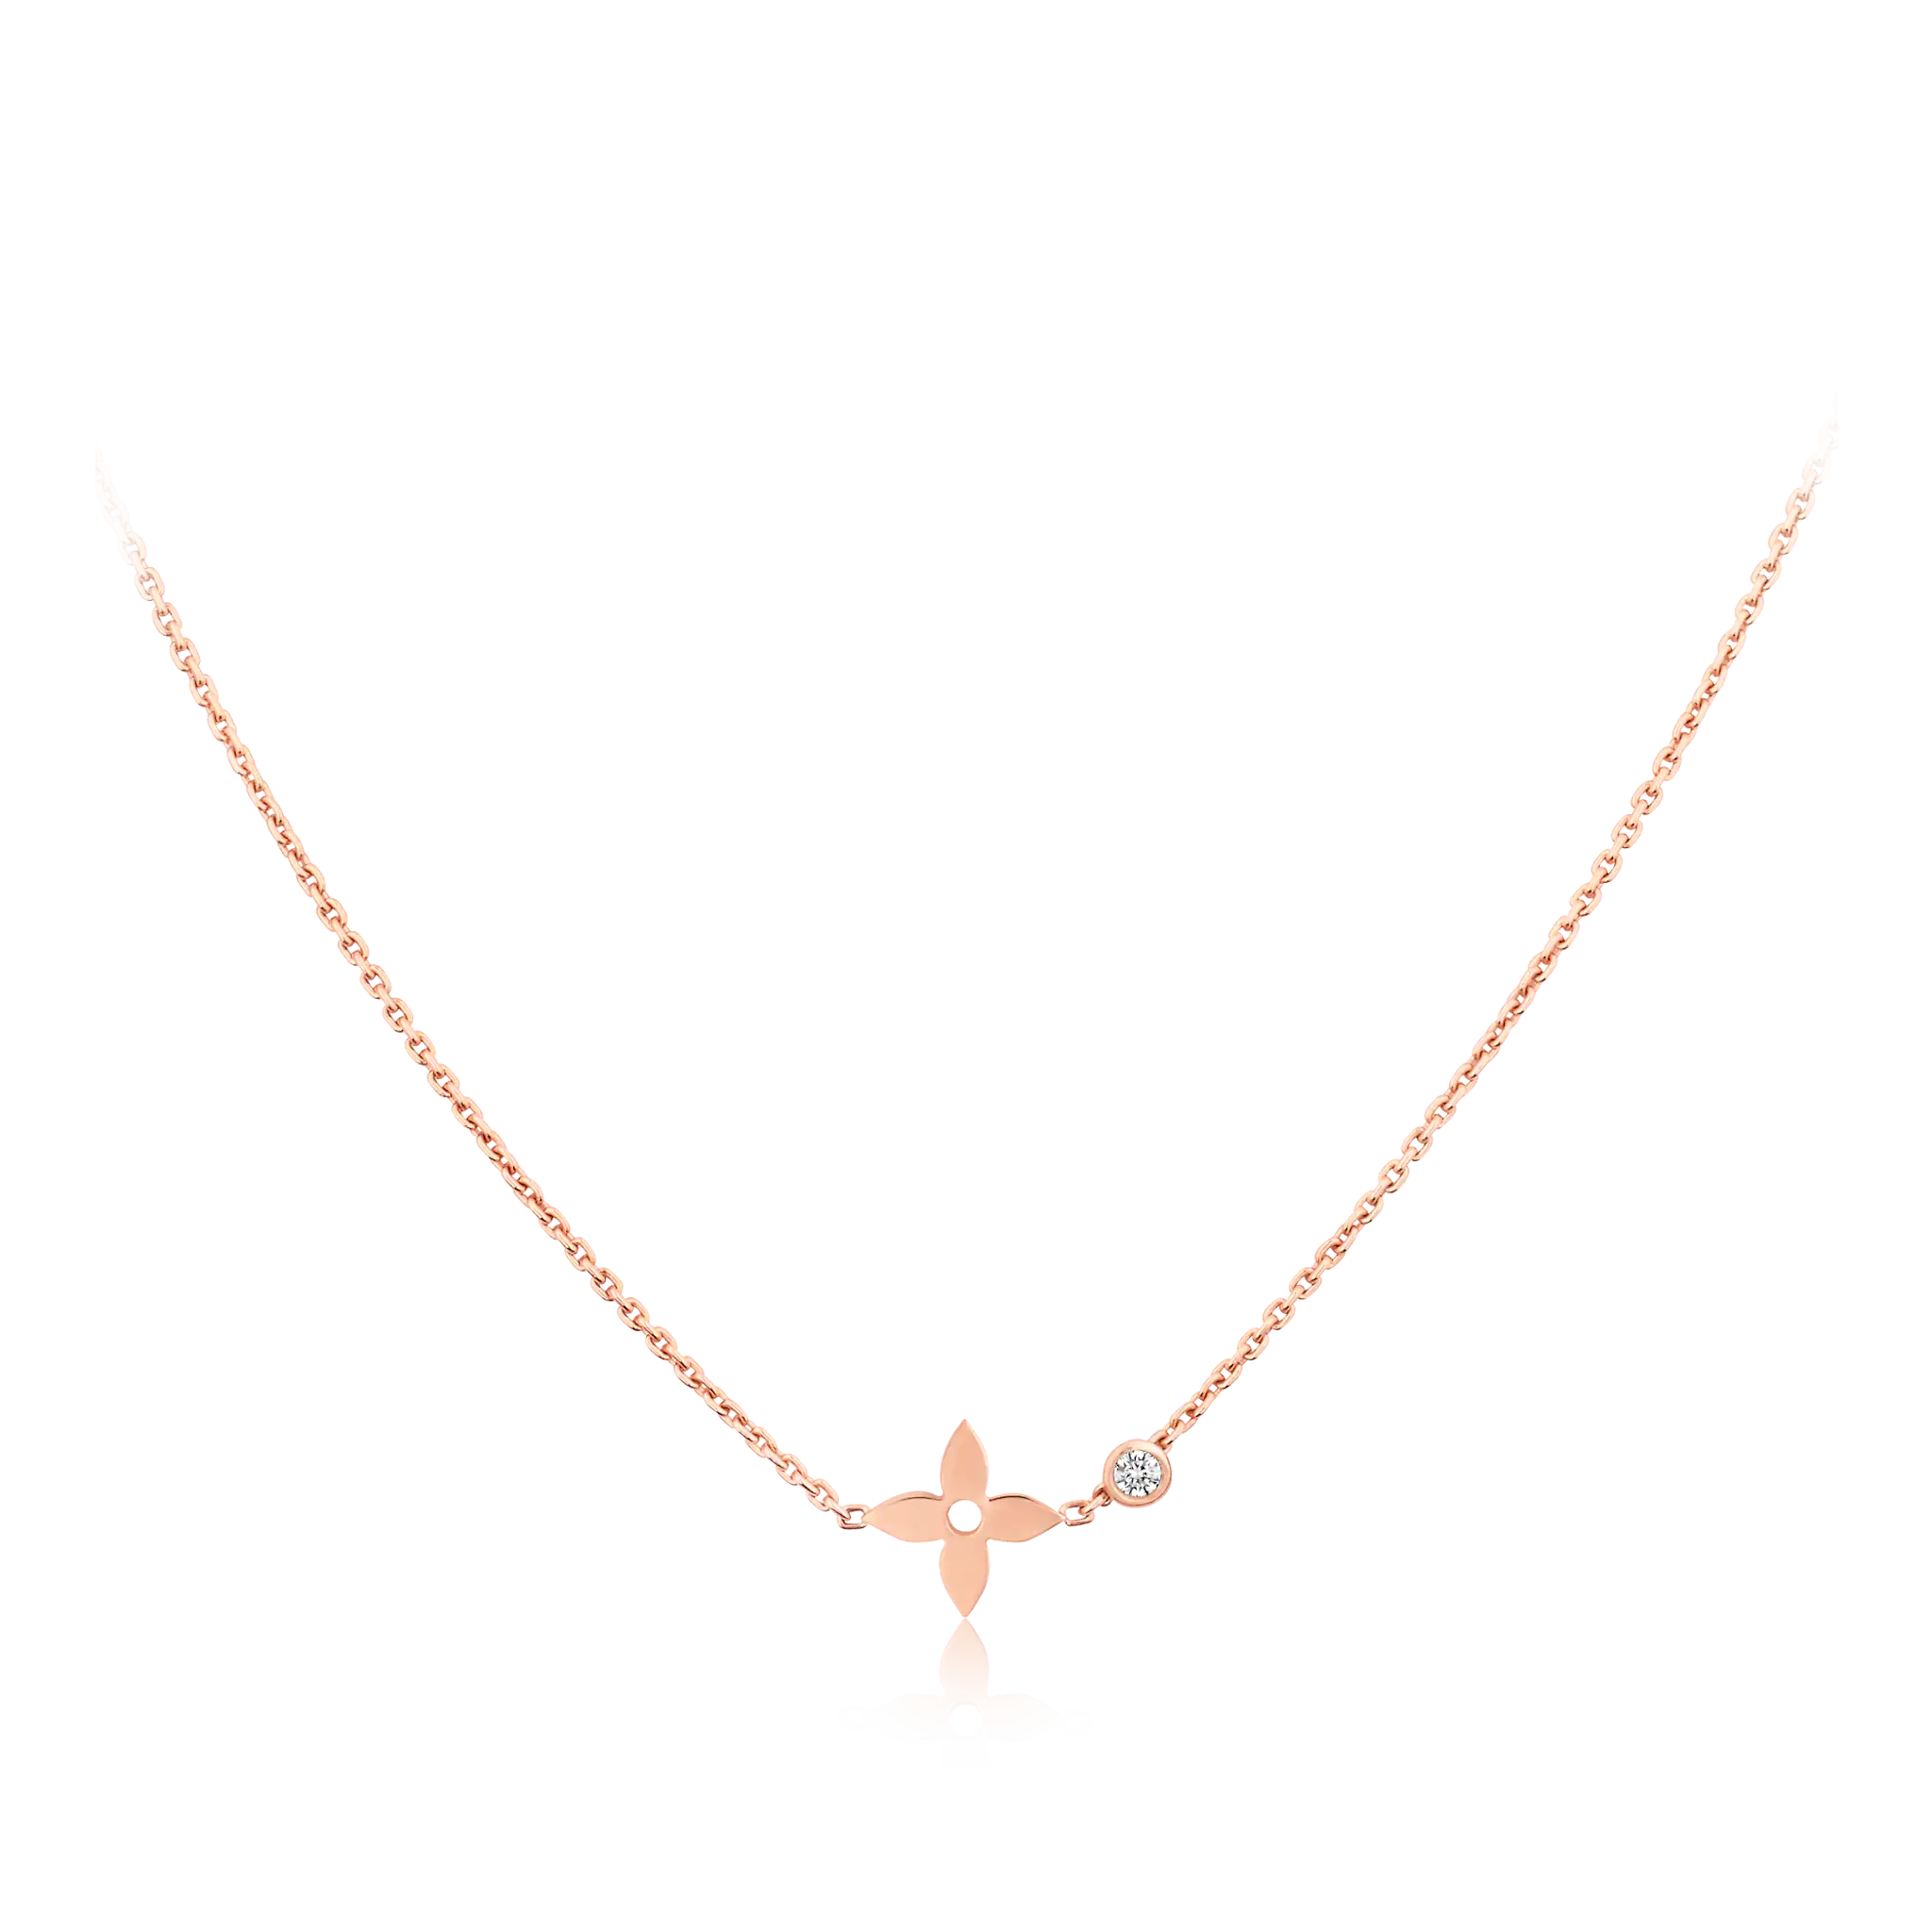 LOUIS VUITTON Color Blossom Star Pendant Necklace MOP Pink Gold